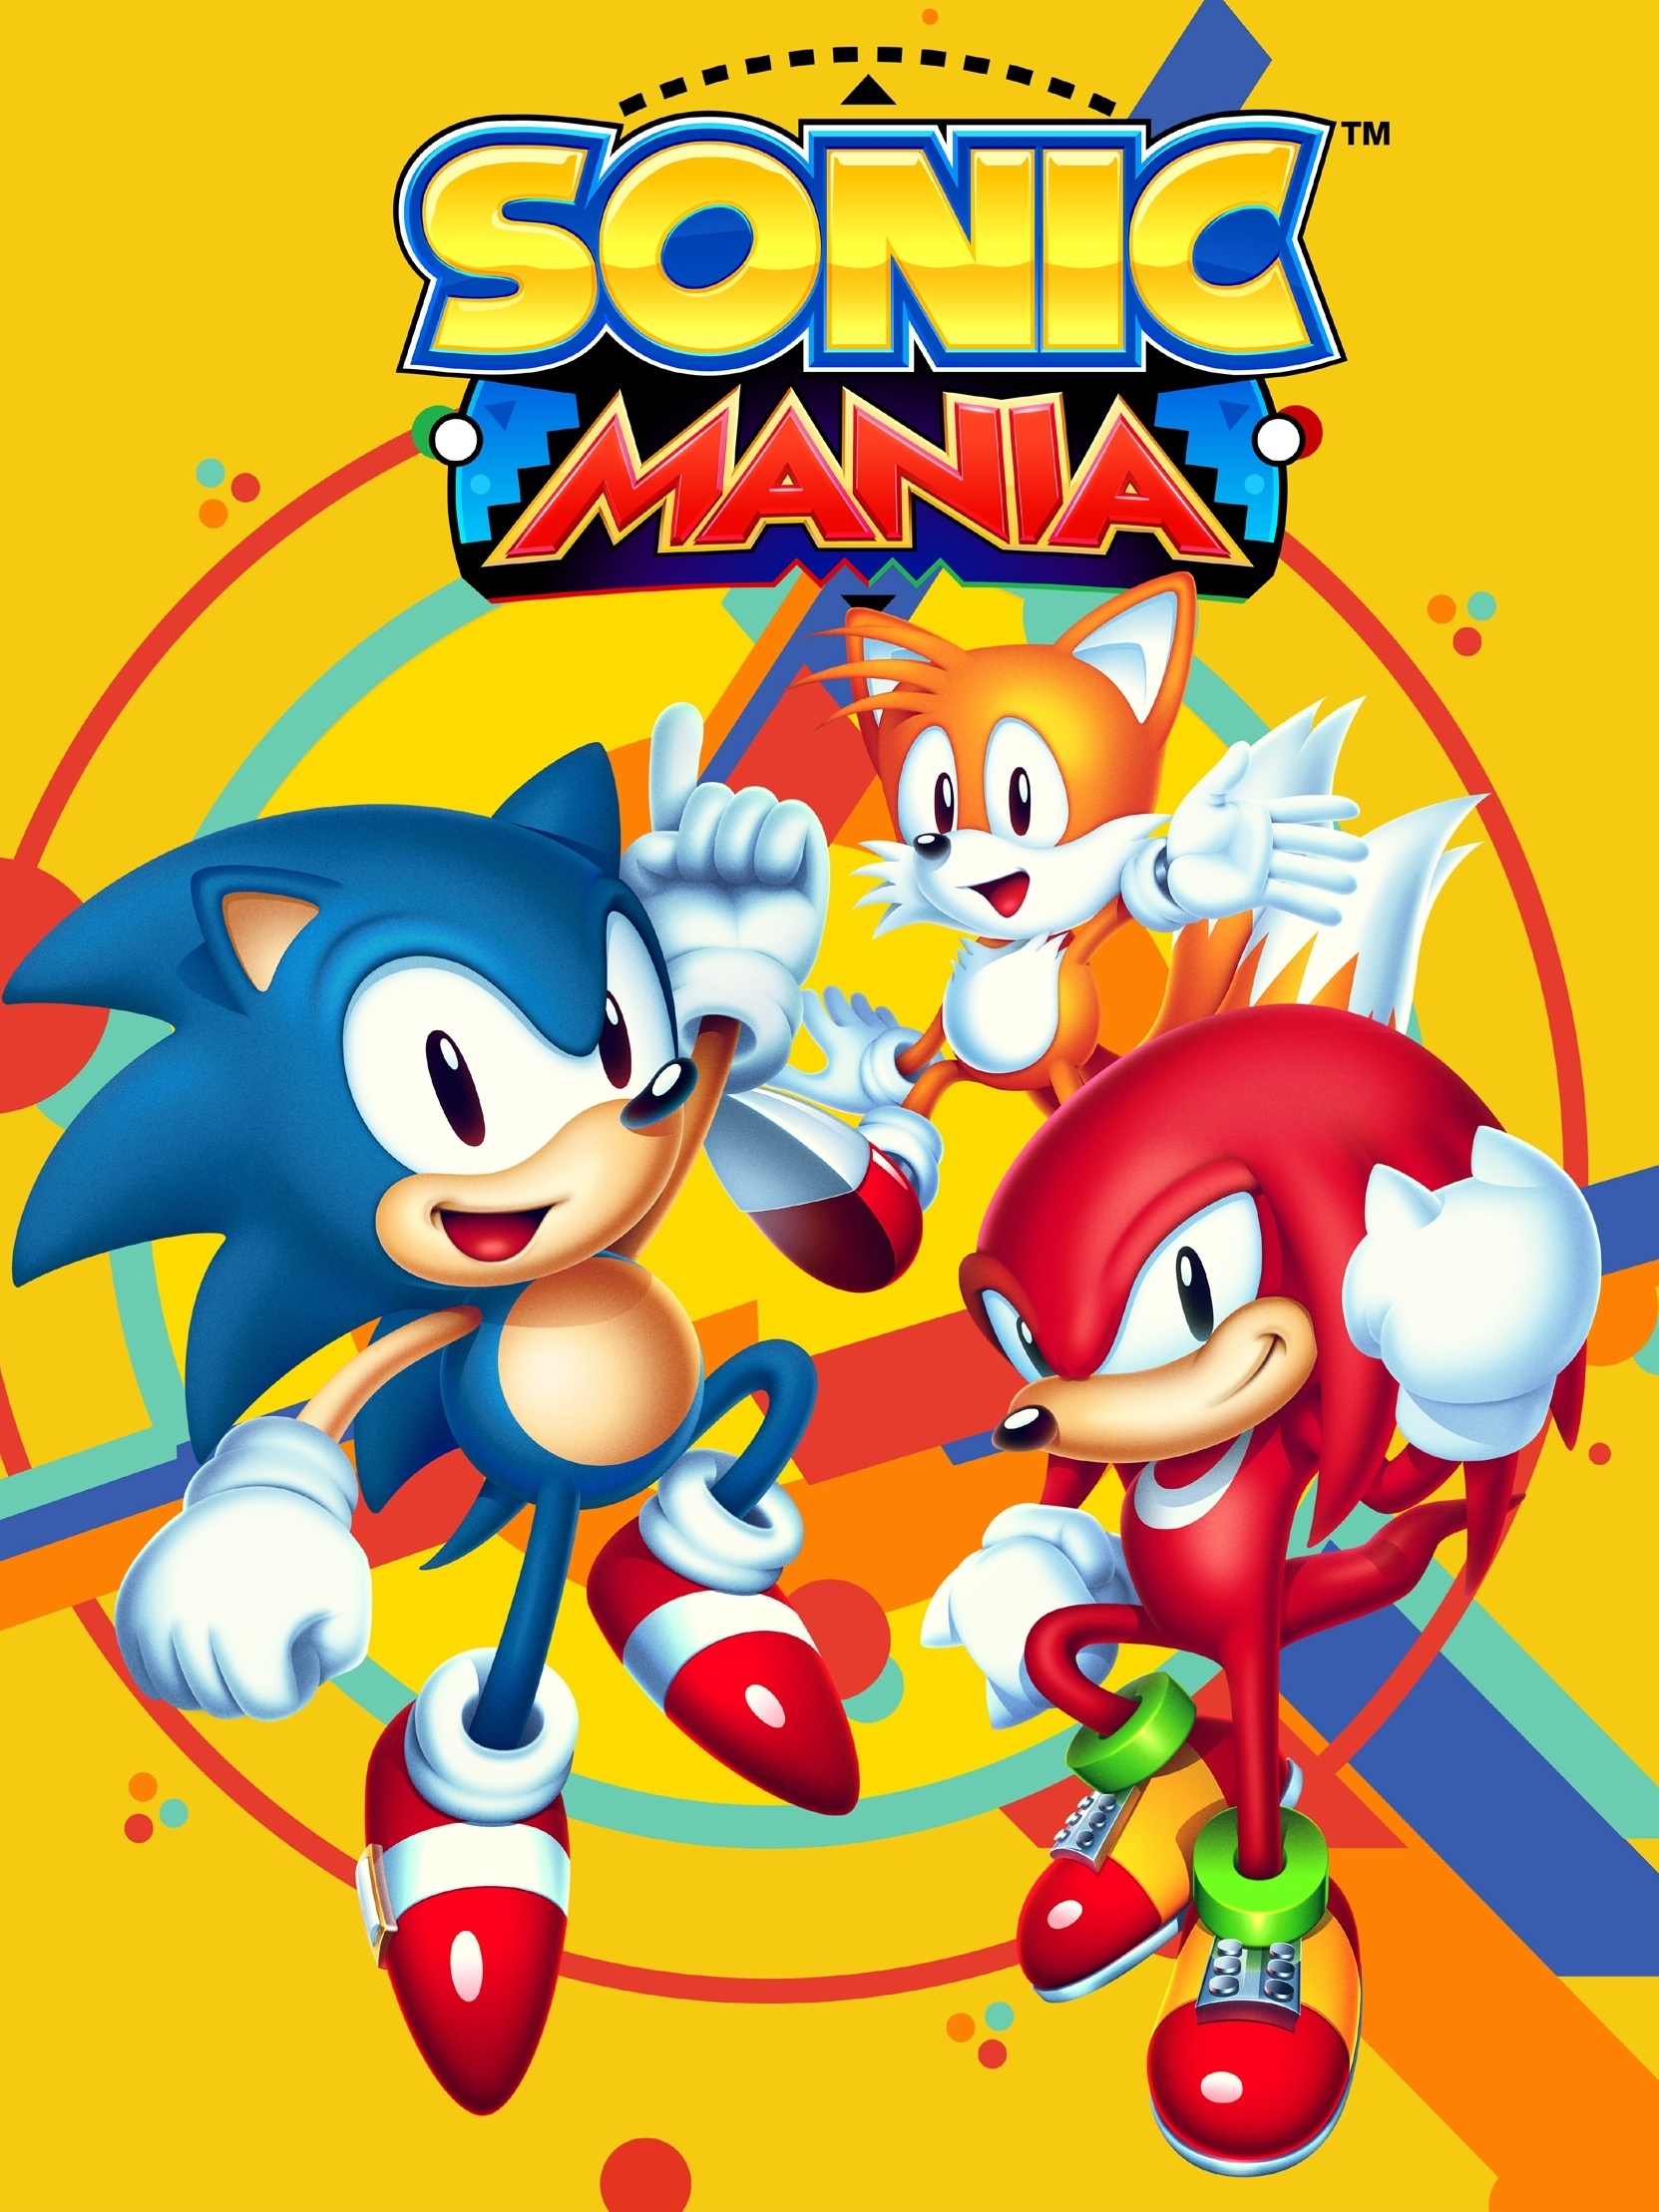 Sonic Mania - Aumente o som e escute o tema musical da fase bônus